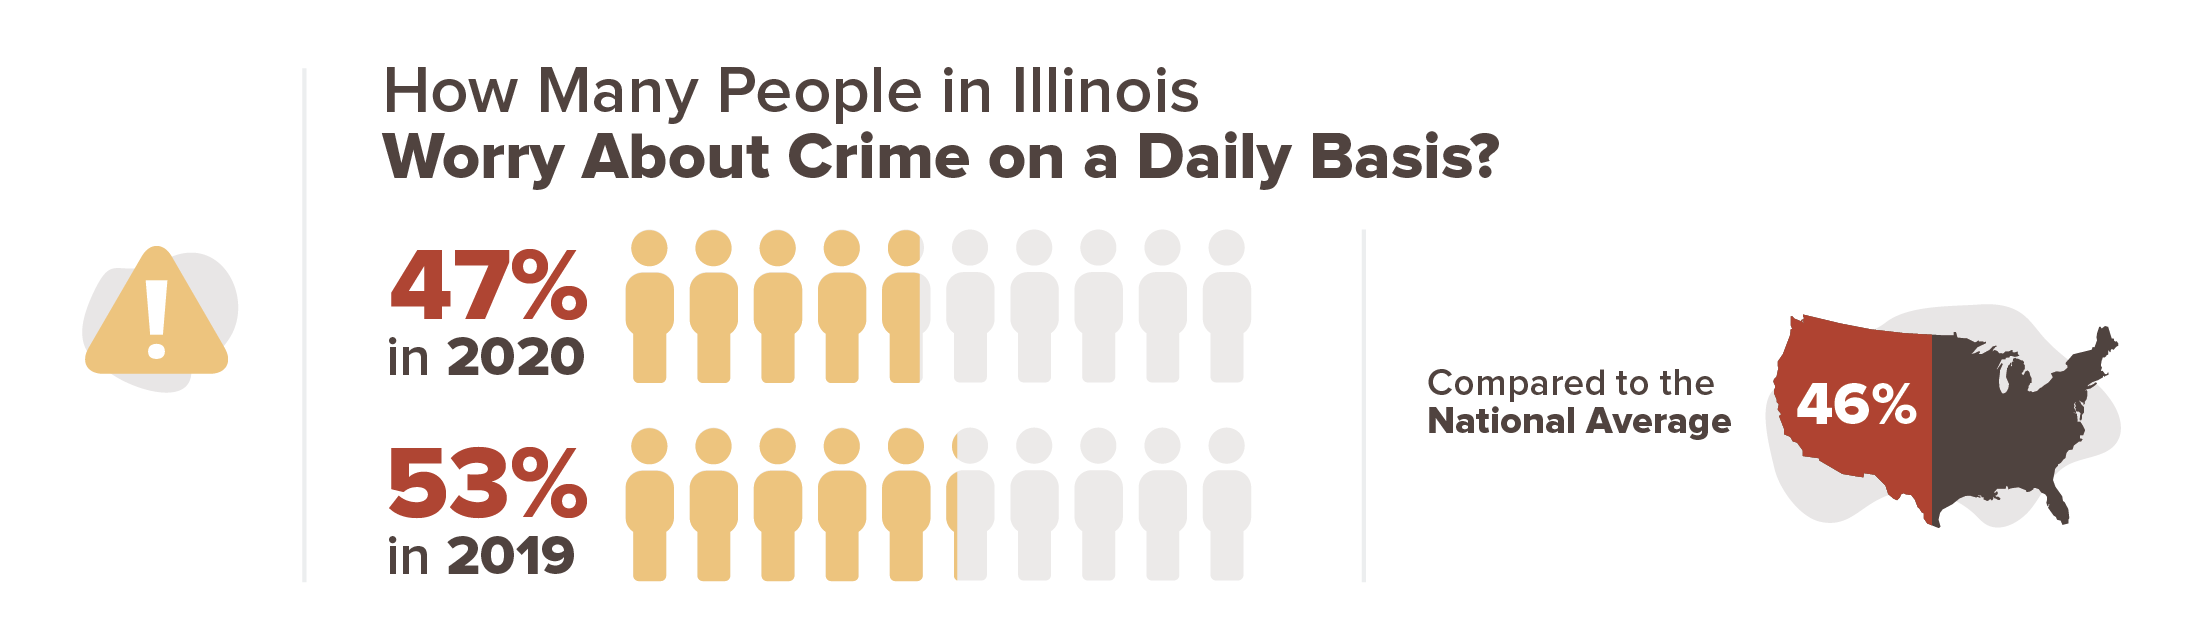 Illinois crime statistics infographic